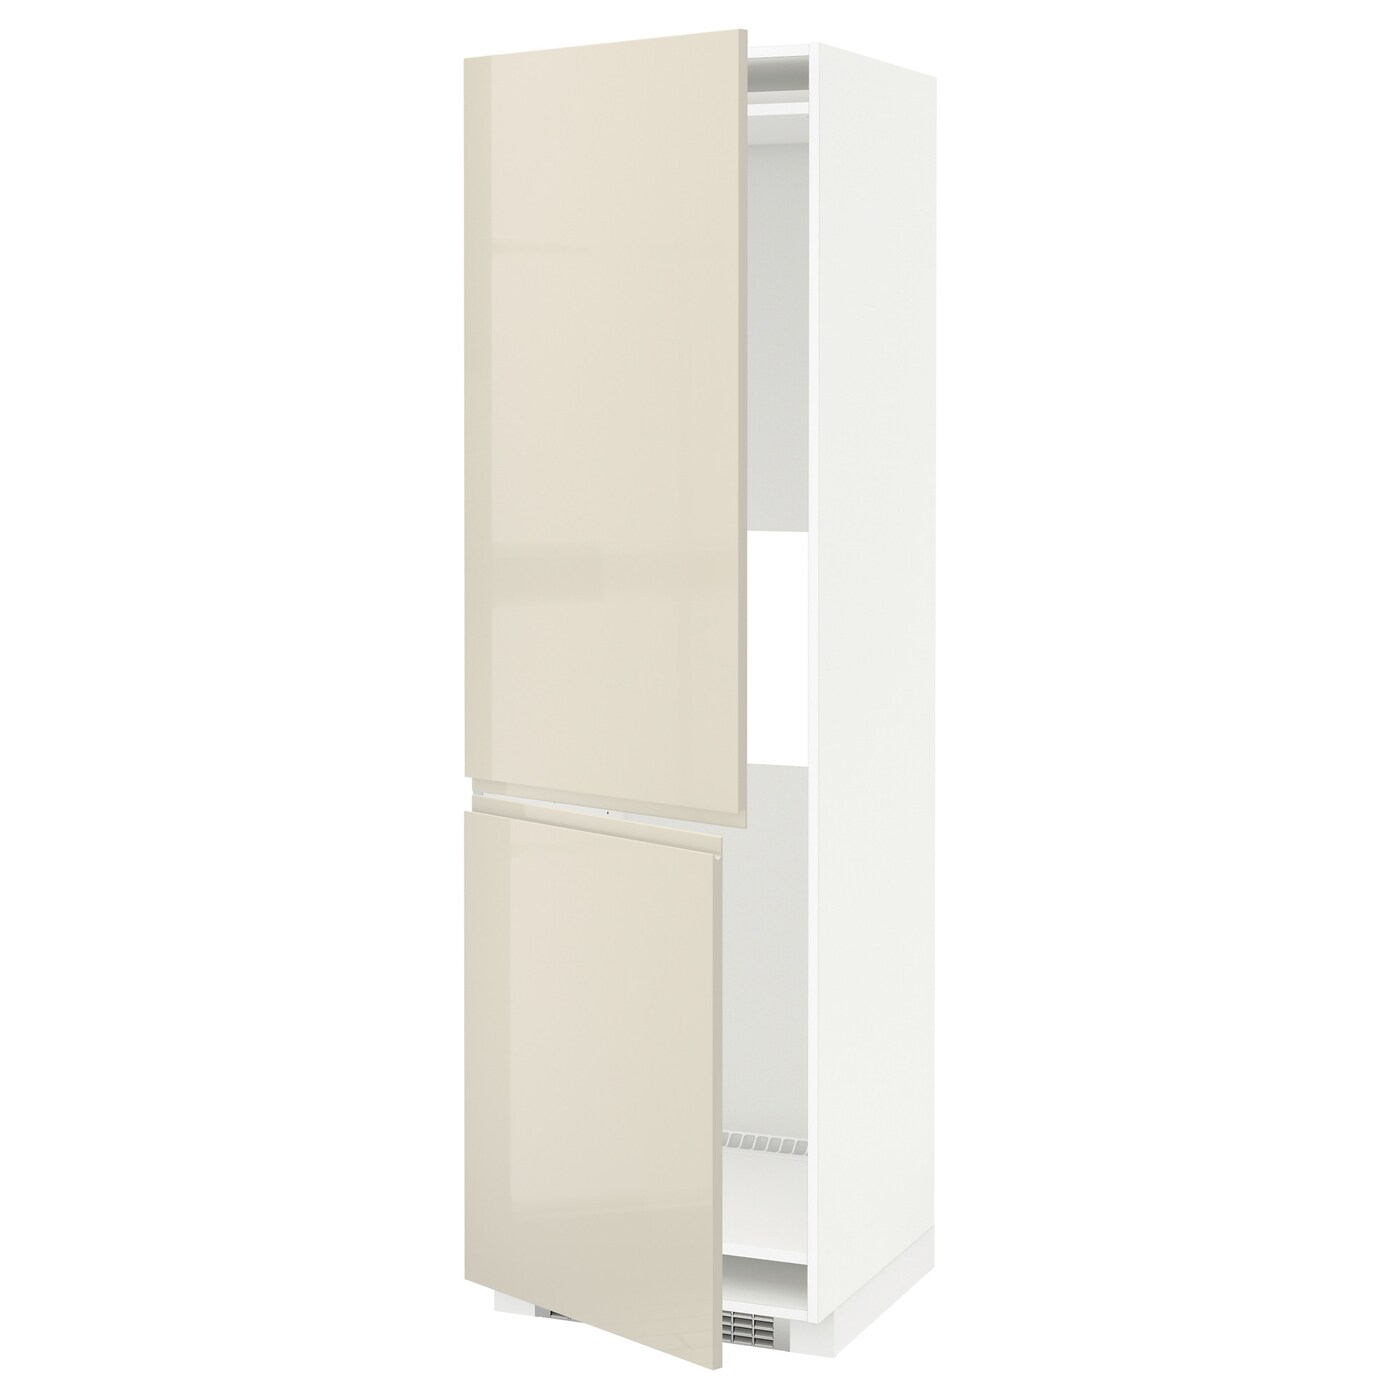 Высокий кухонный шкаф - IKEA METOD/МЕТОД ИКЕА, 200х60х60 см, белый/бежевый глянцевый